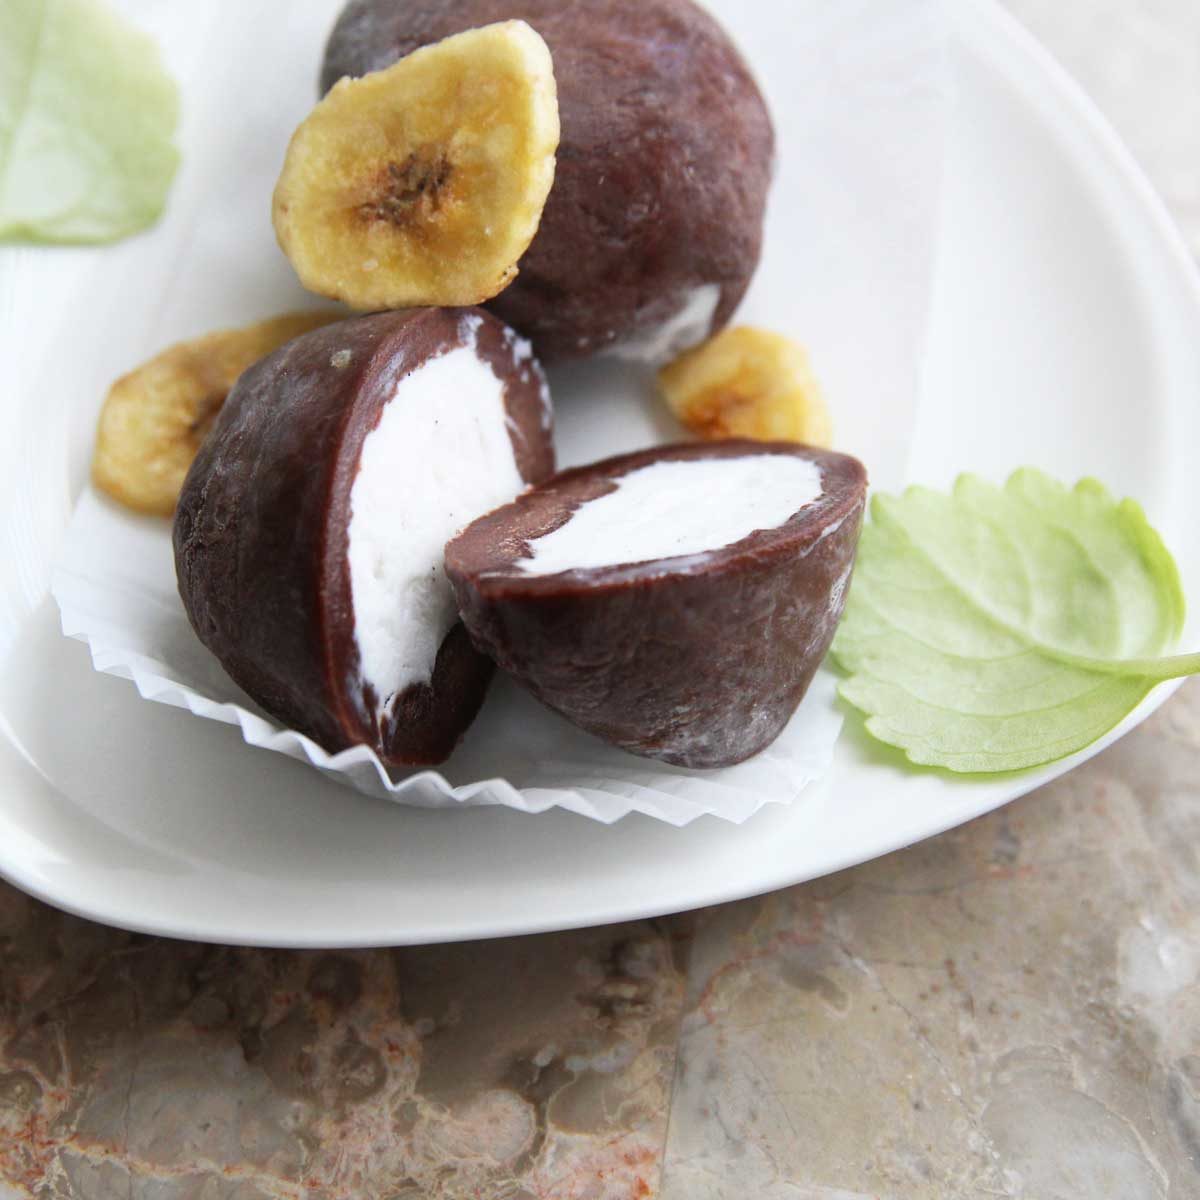 Homemade Banana Chocolate Mochi Balls with Vanilla Ice Cream - chocolate mochi